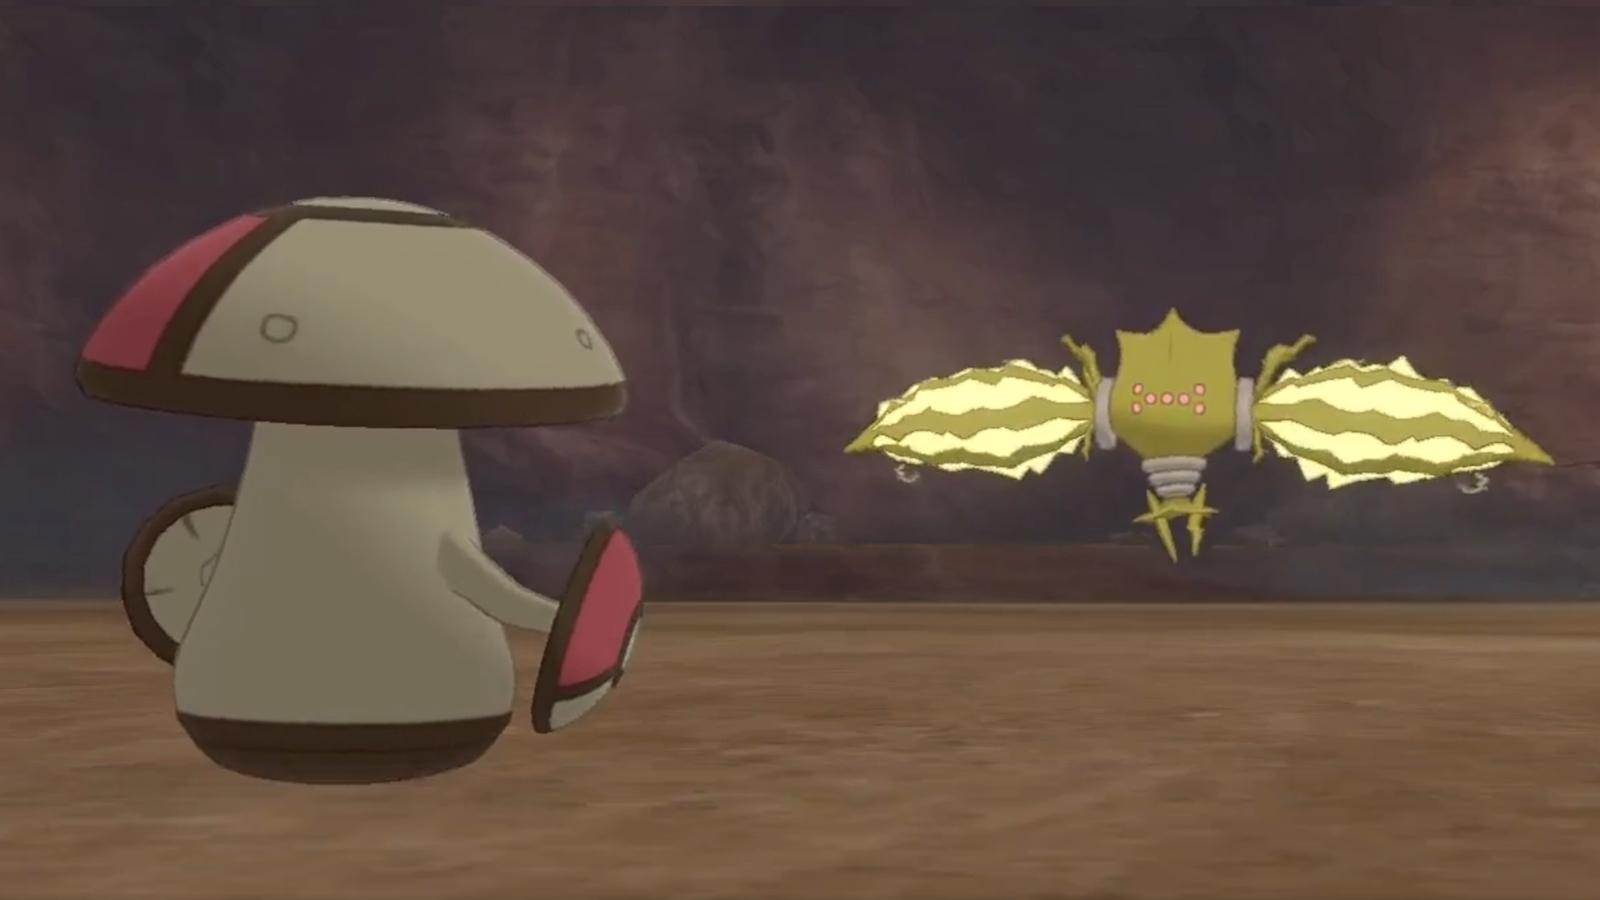 amoonguss in Pokemon Sword & Shield about to kill shiny regieleki thanks to its effect sport ability.